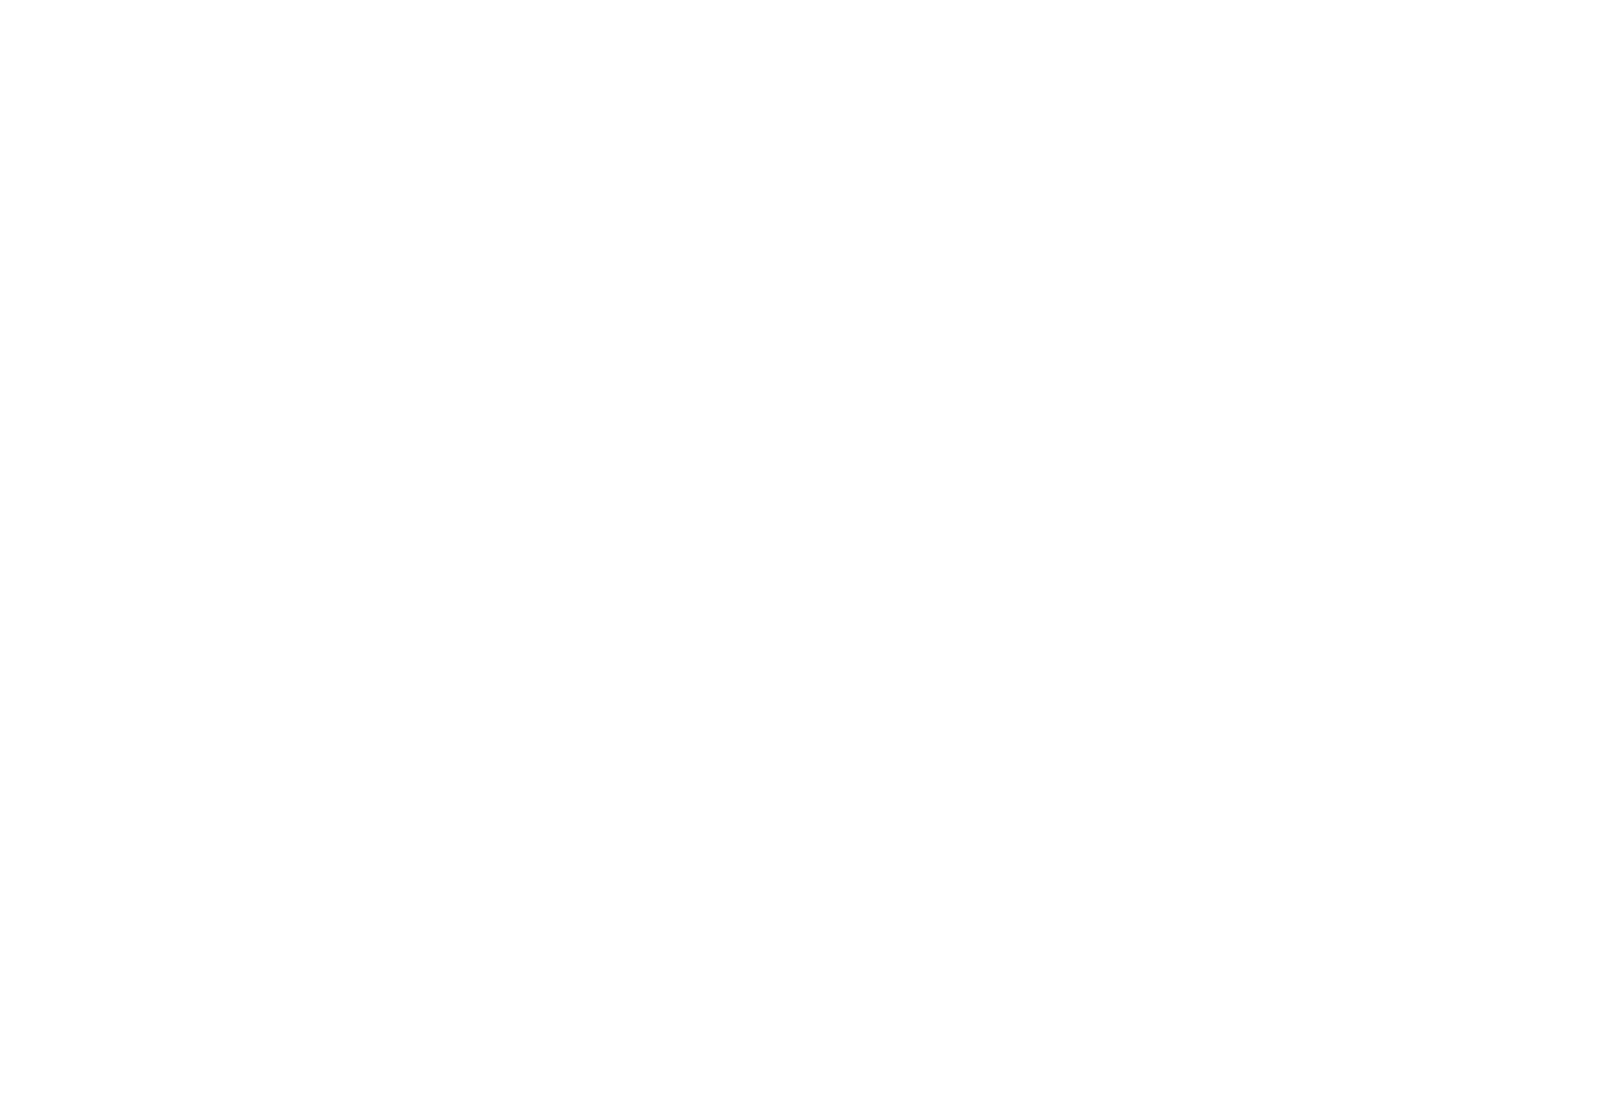 Philadelphia Flyers hand SeatGeek first NHL ticket partnership - SportsPro